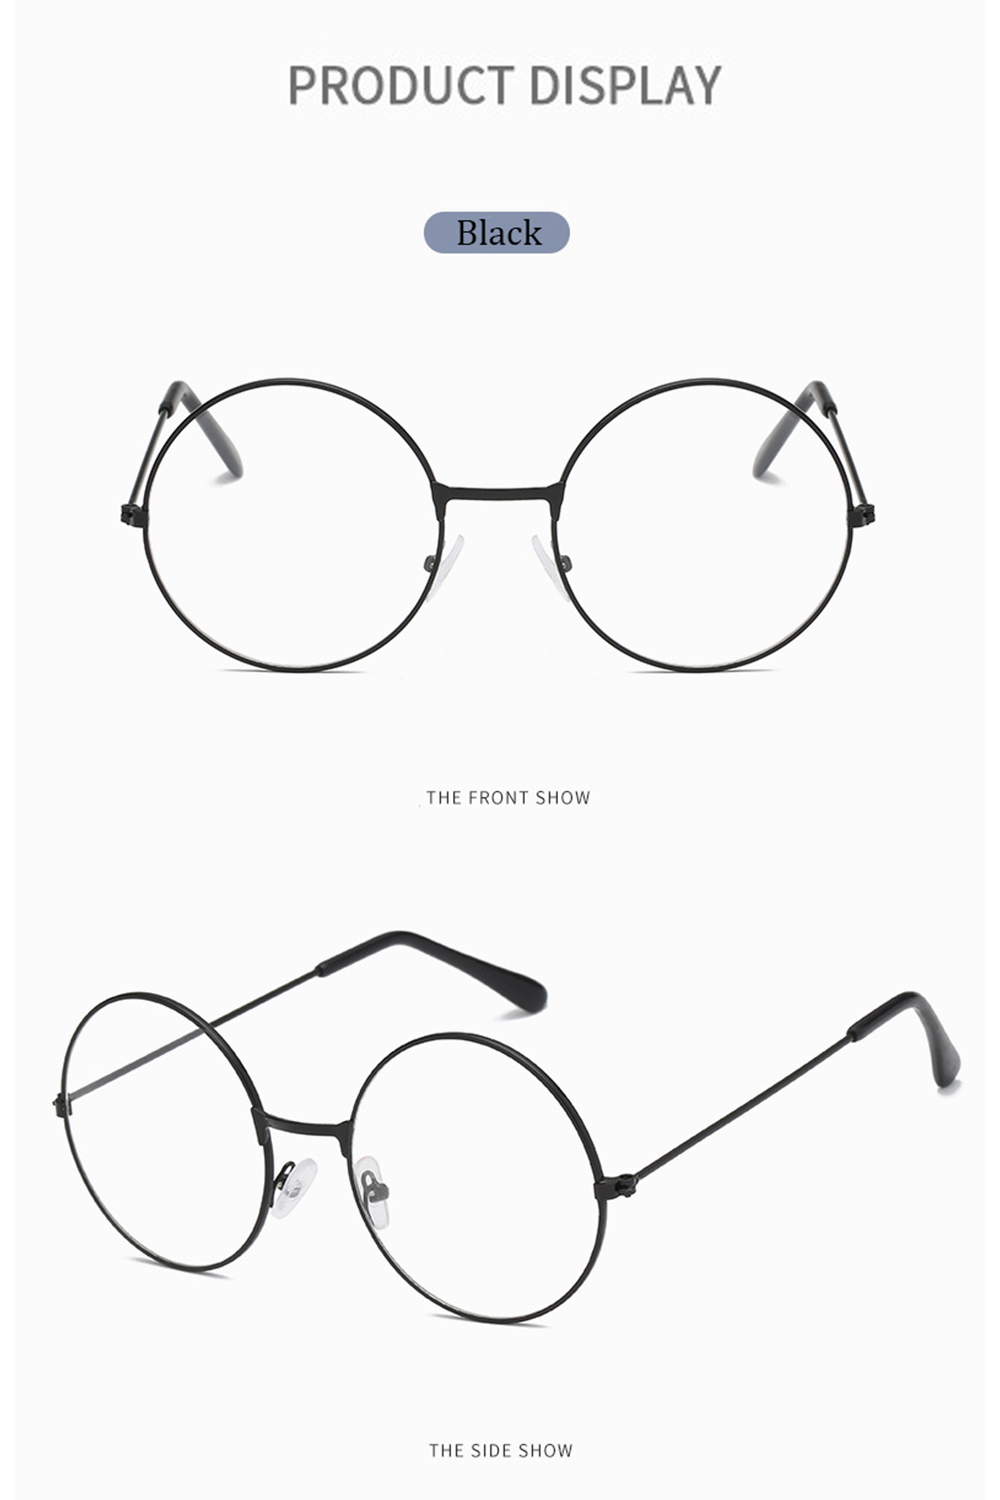 NONOR Fashion Harry Eyewear Eyeglasses Black Small Round Vintage Retro Metal Frame Clear Lens Glasses Round Circle Eye Glasses